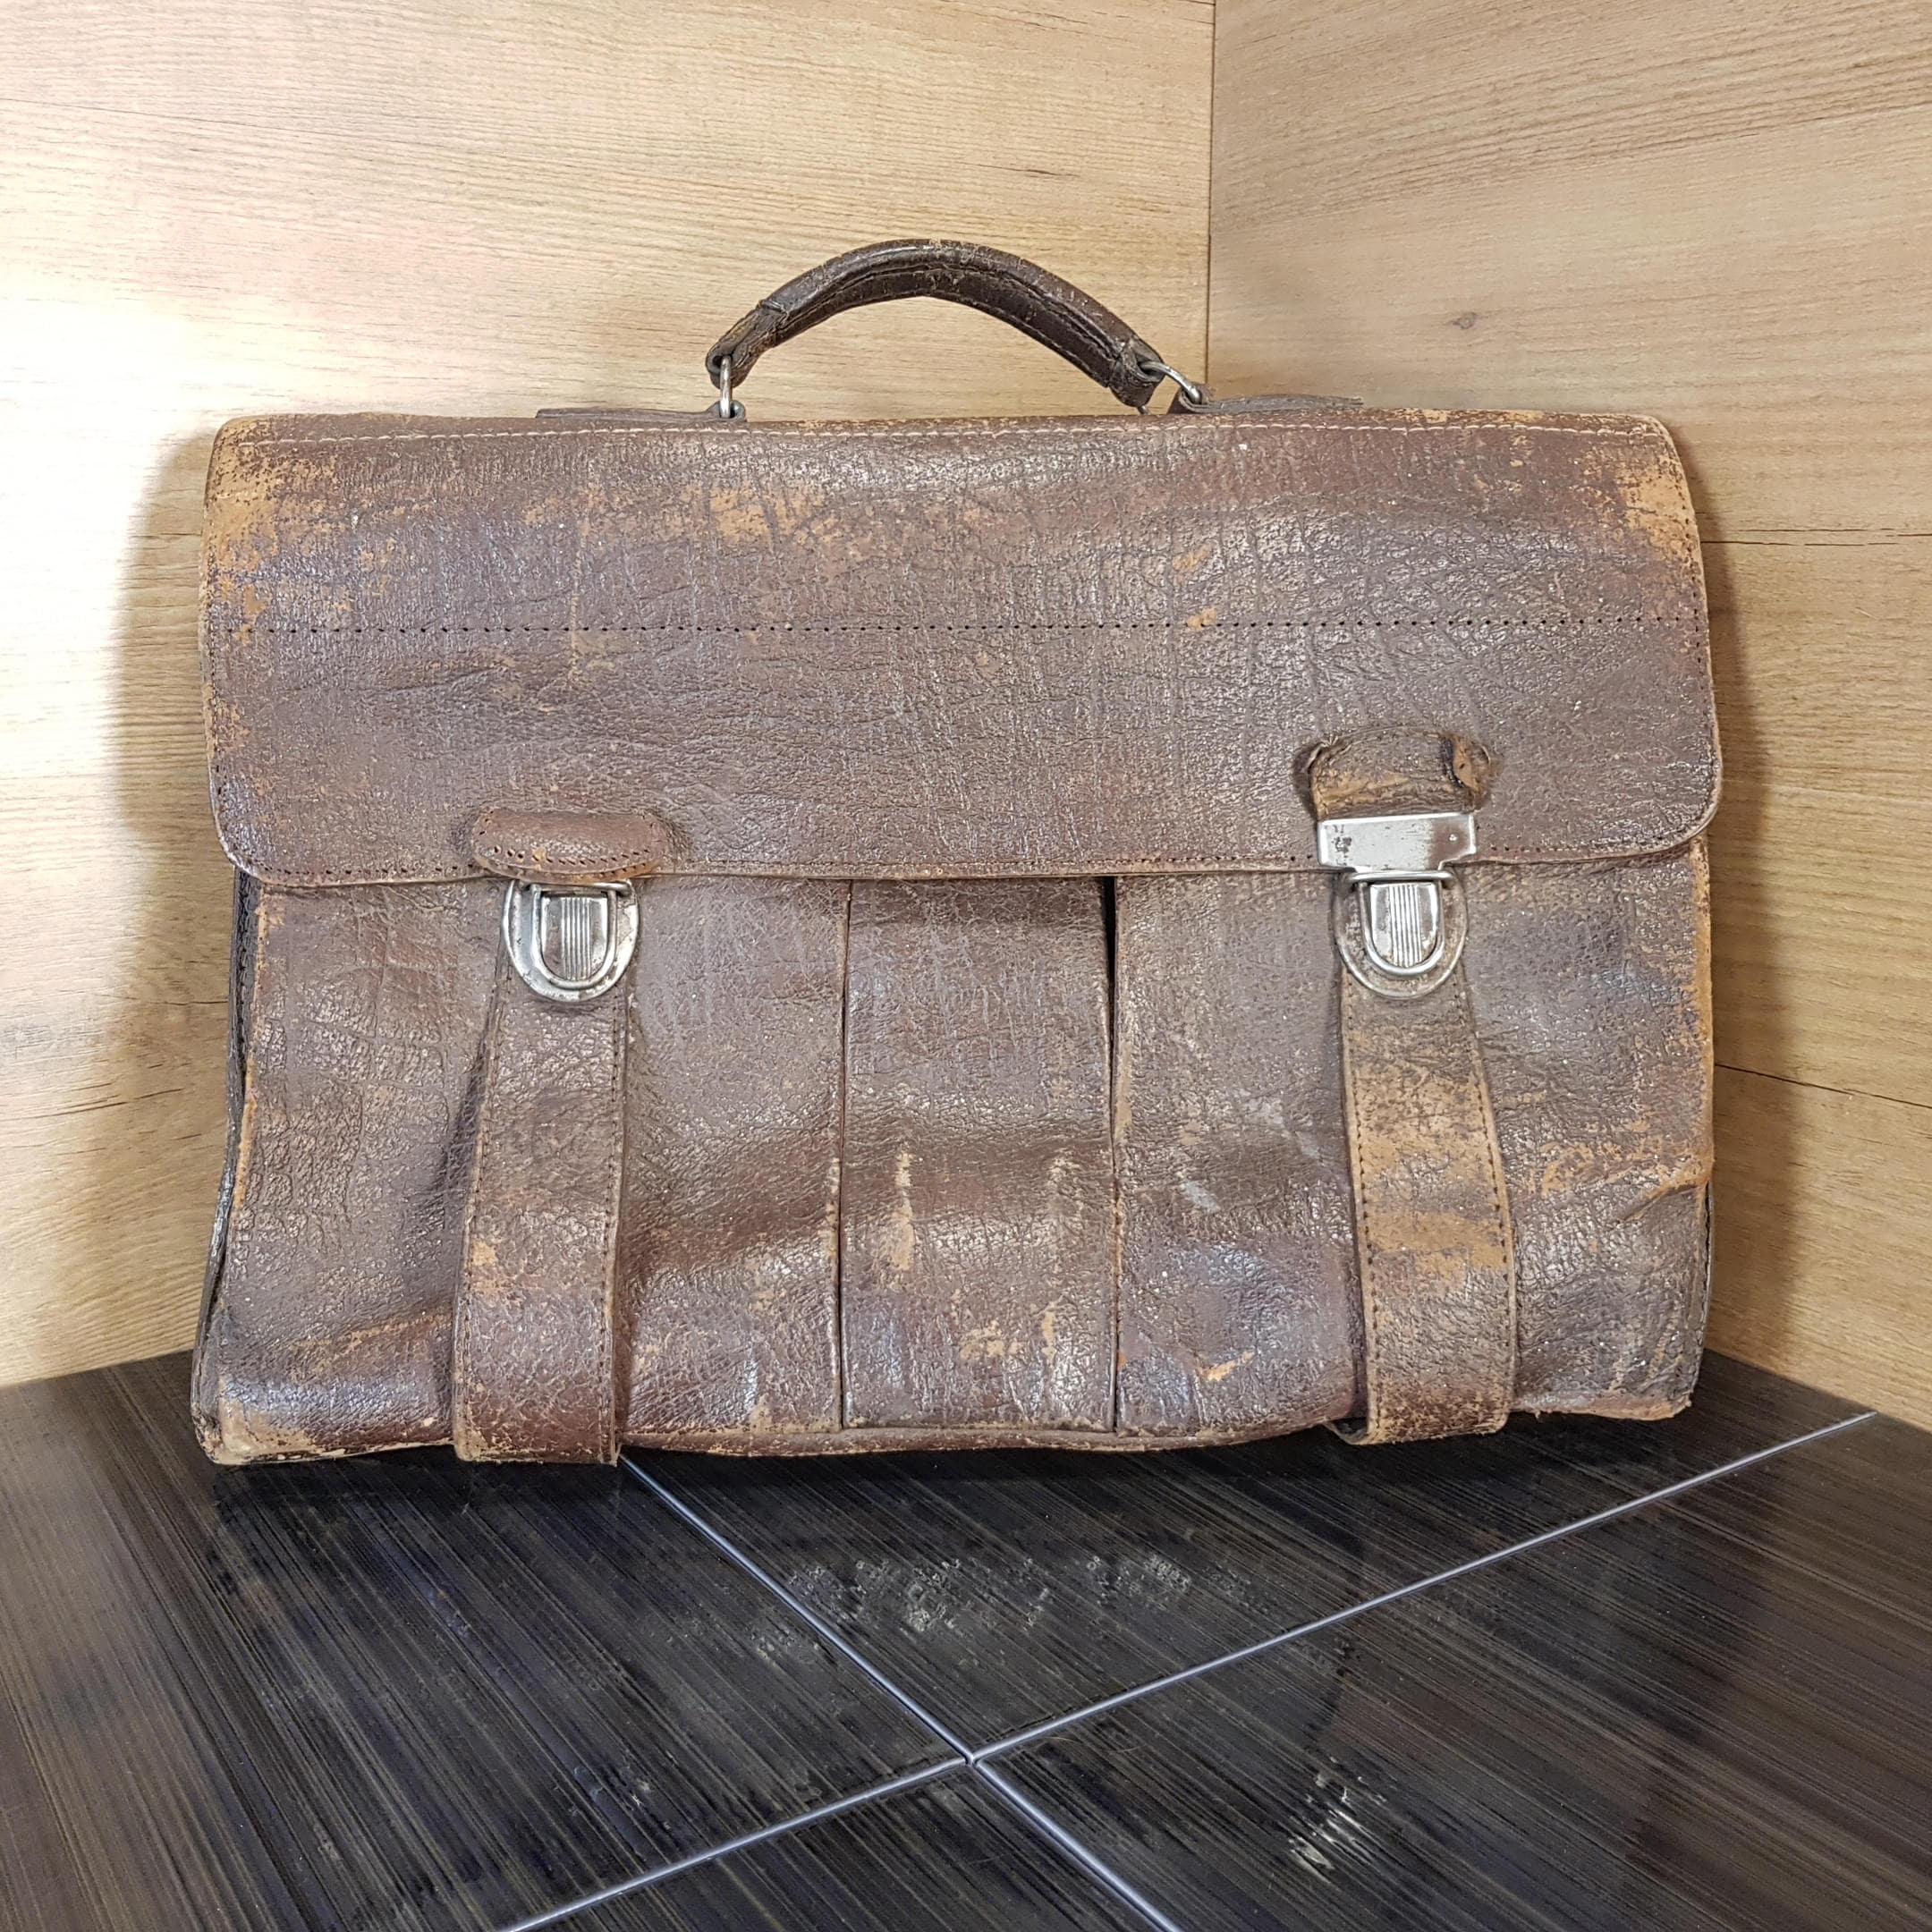 1930s Chanel Boston Speedy bag brought... - Brisbane Bag Spa | Facebook